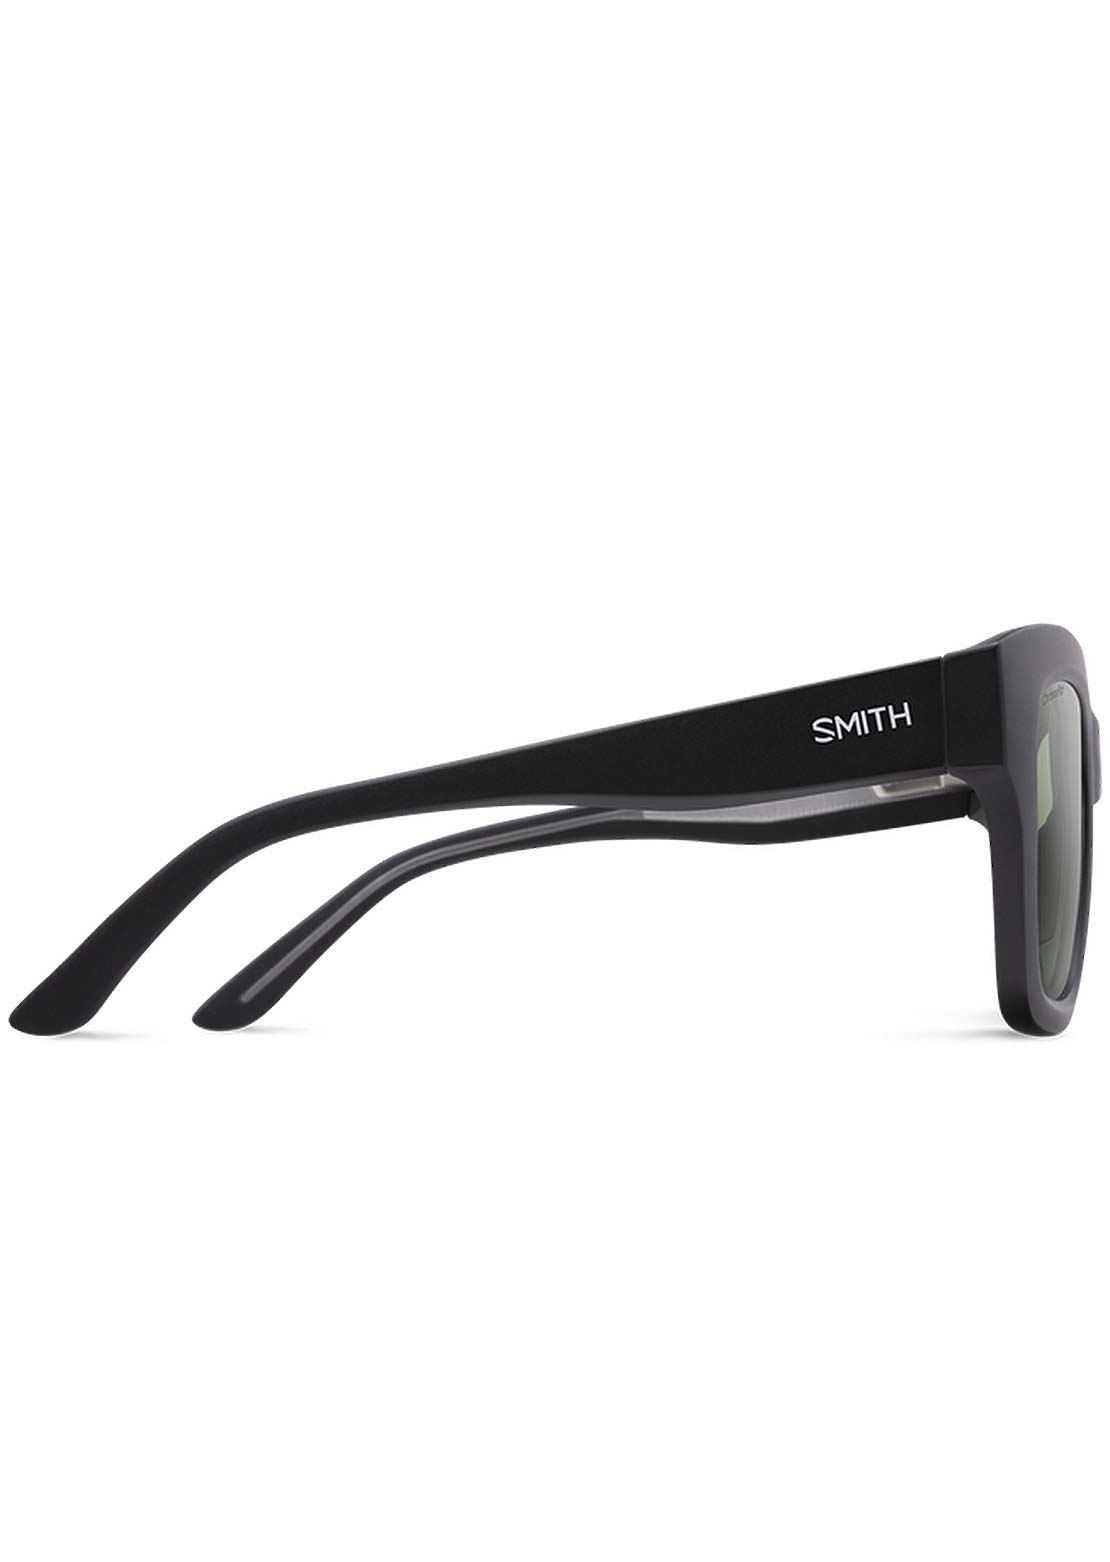 Mountain Bike Sunglasses & Goggles - PRFO Sports